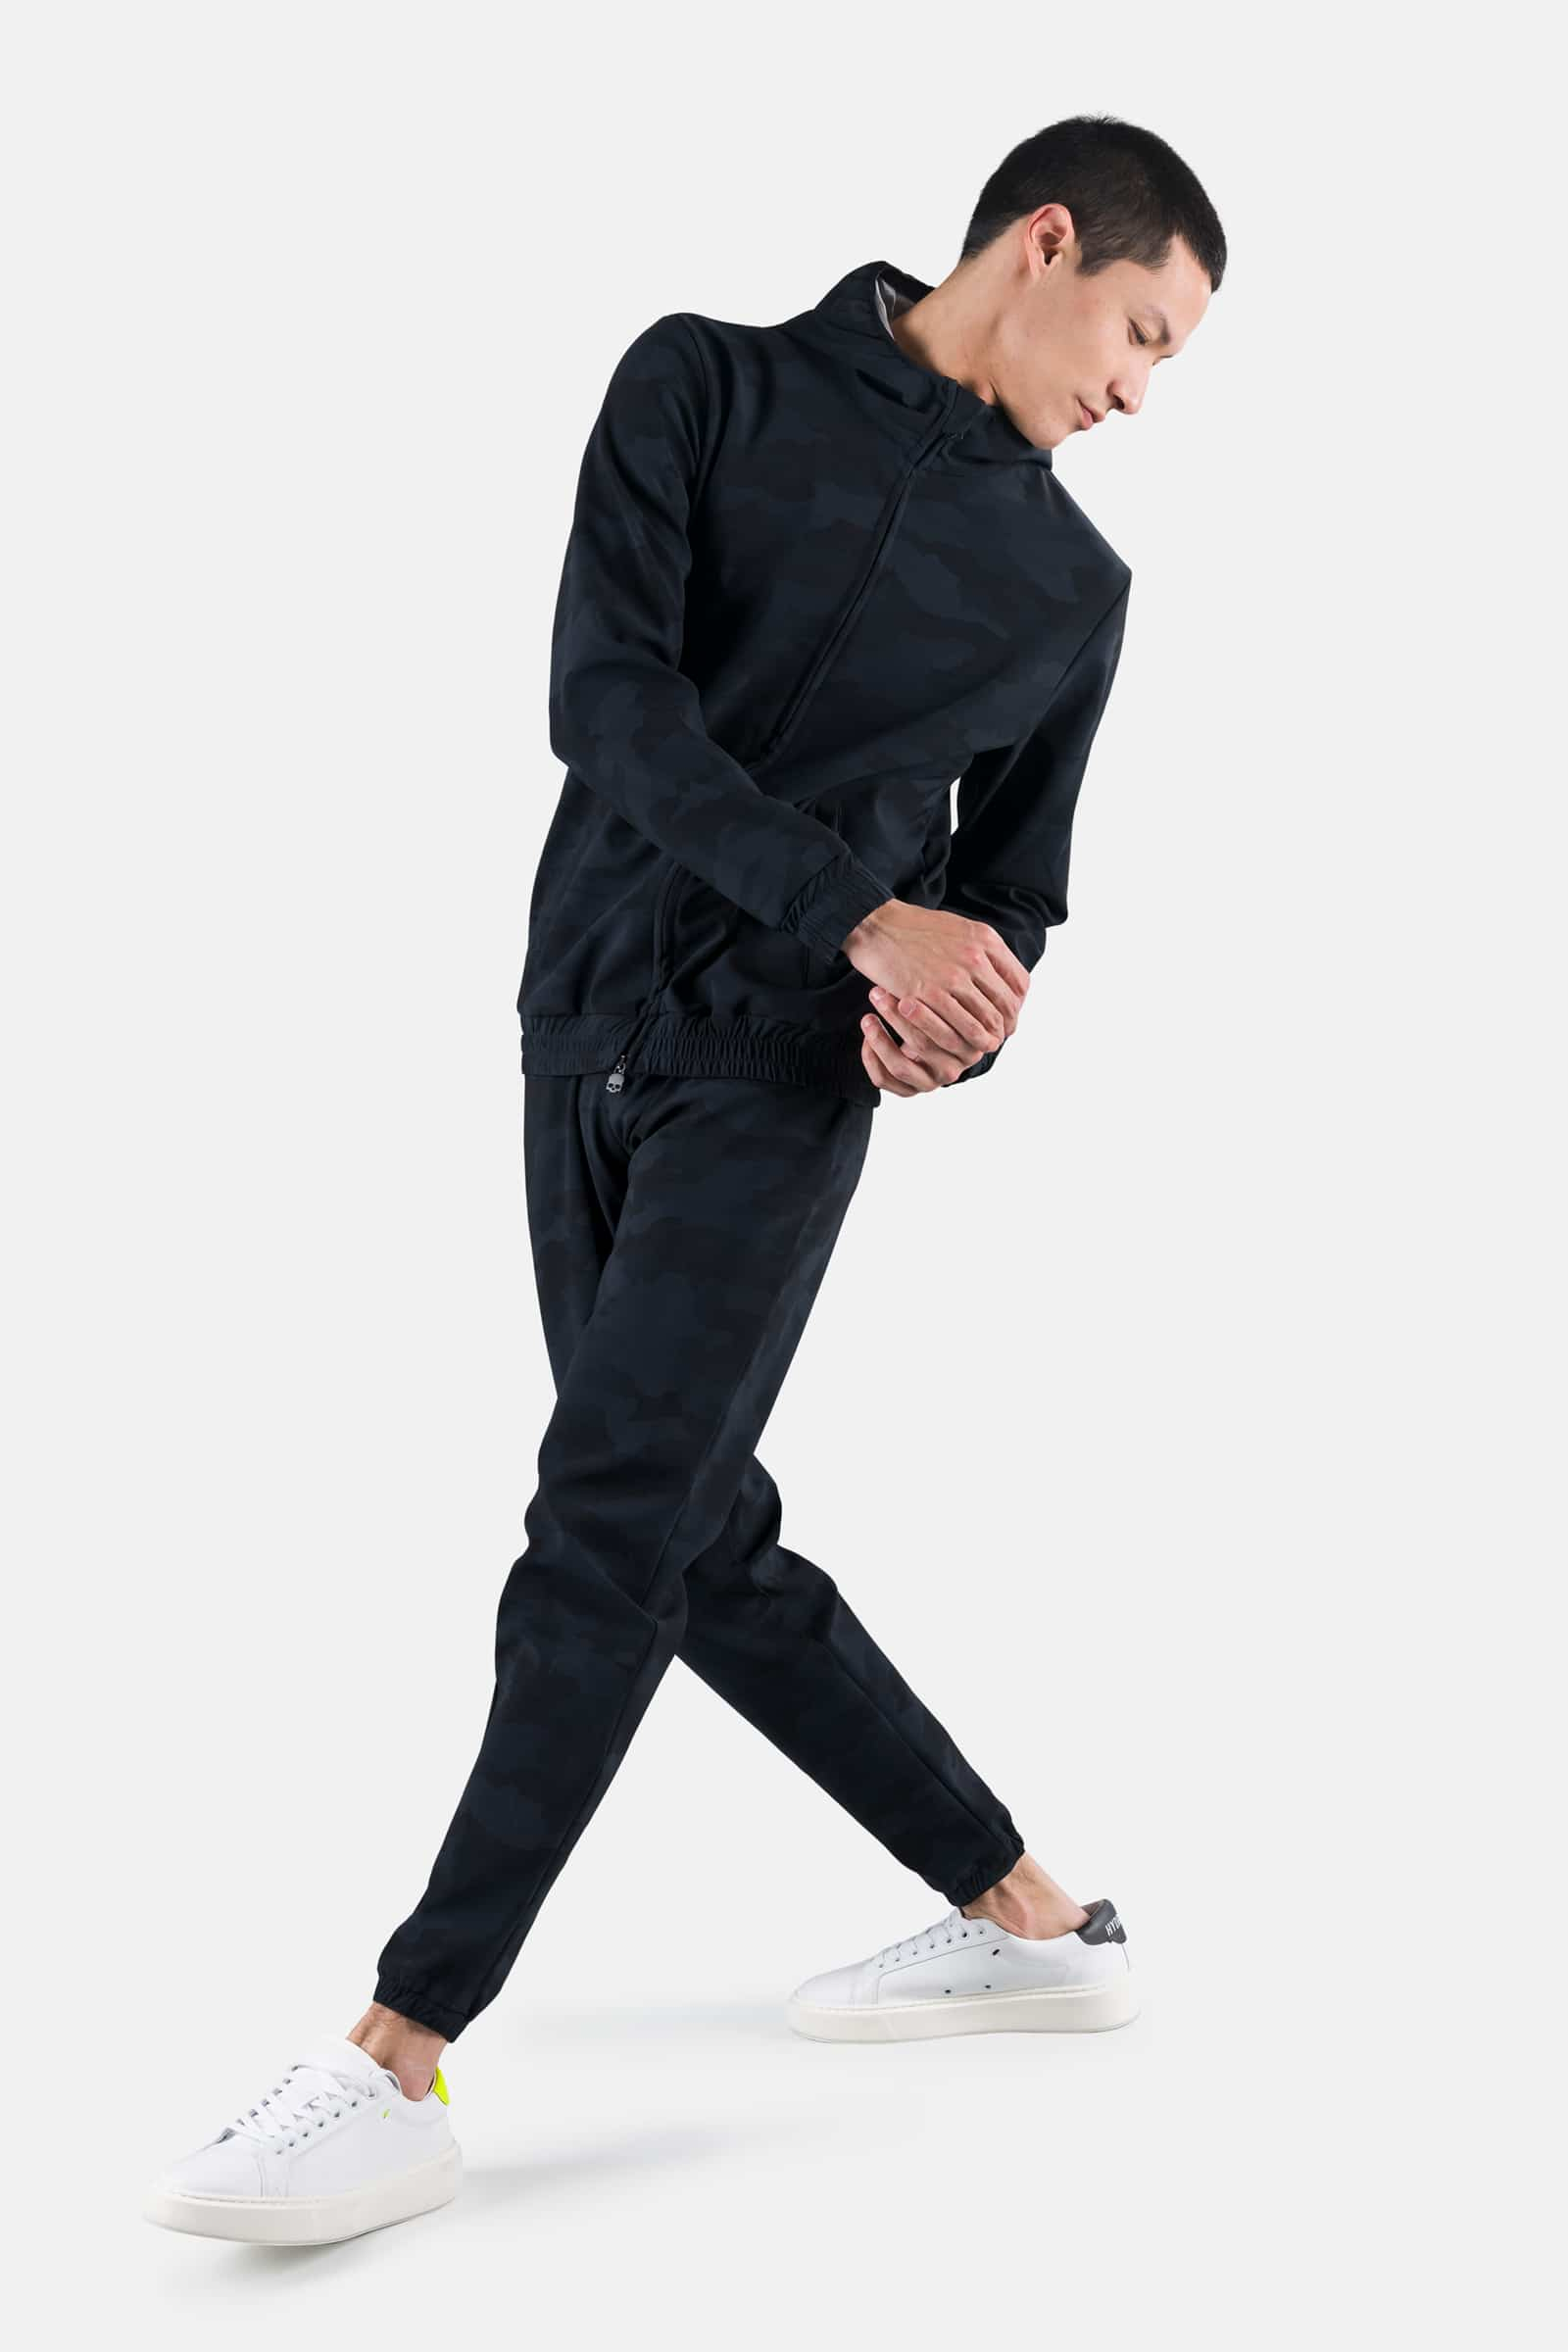 URBAN HOODIE - BLACK CAMOUFLAGE - Hydrogen - Luxury Sportwear